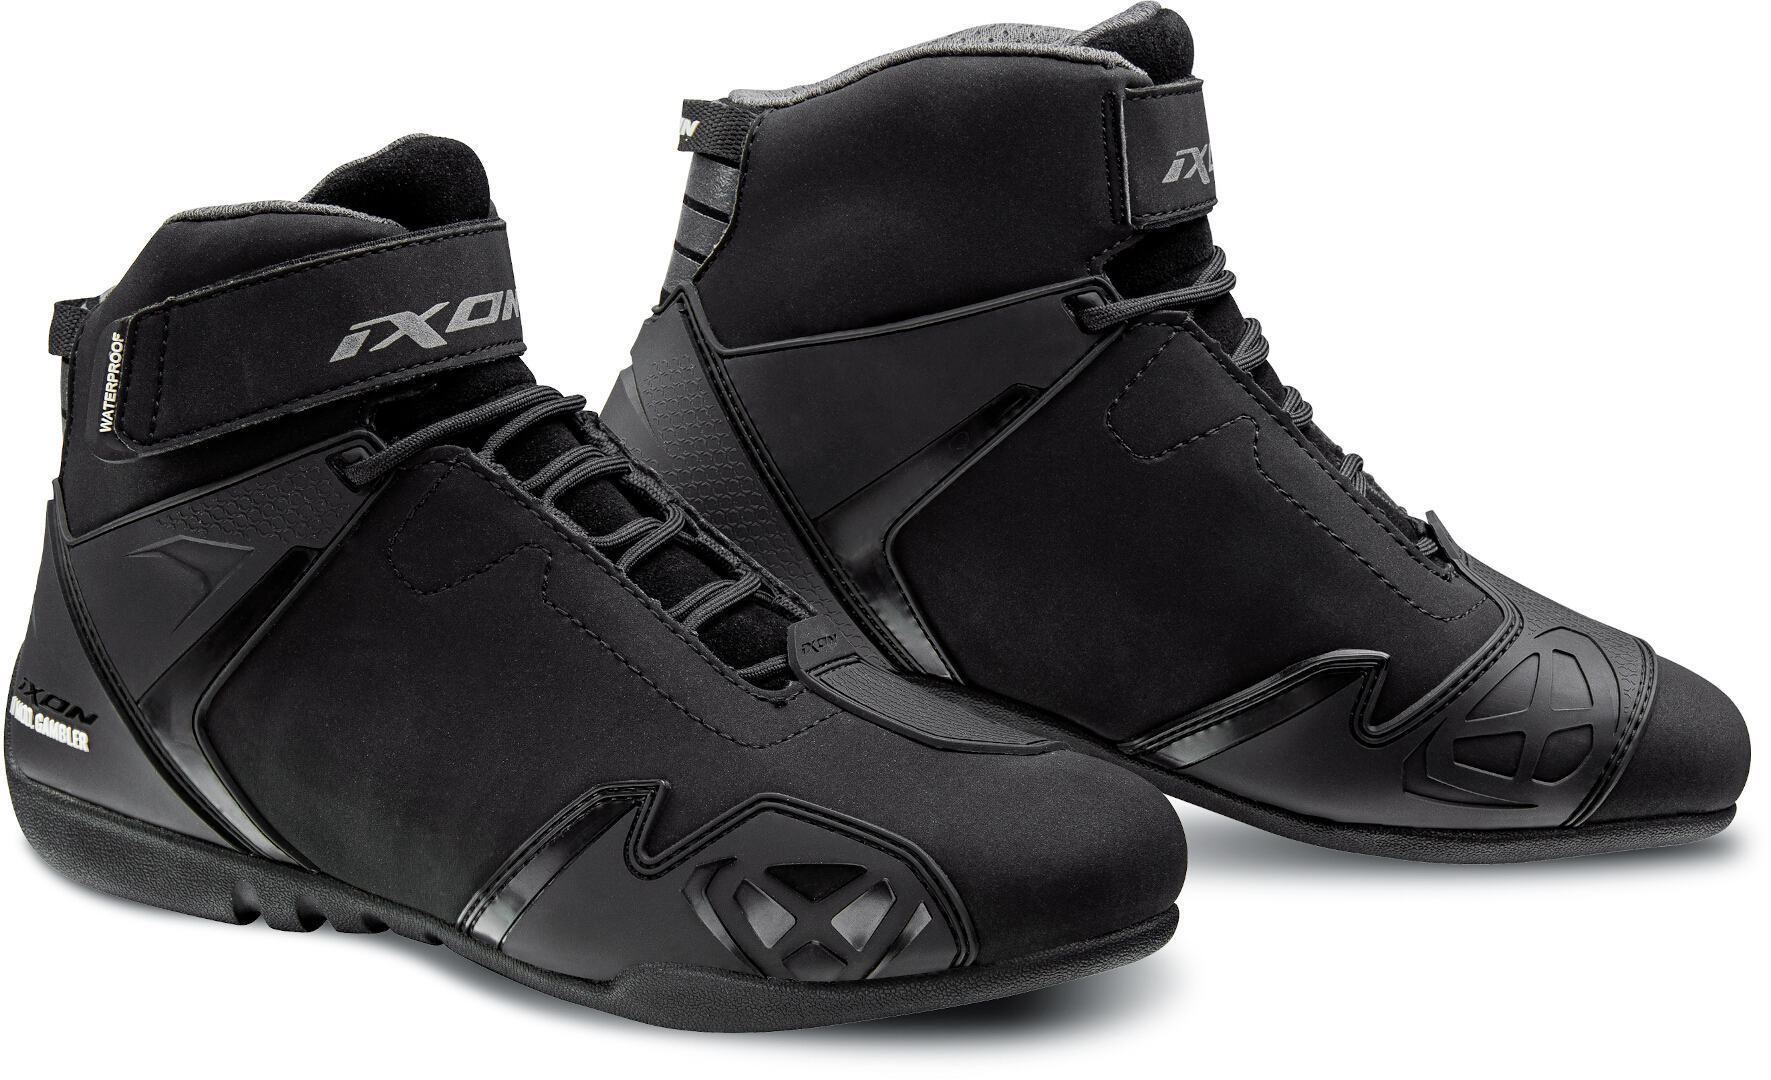 Ixon Gambler WP Ladies Motorcycle Shoes, black, Size 36 for Women, black, Size 36 for Women